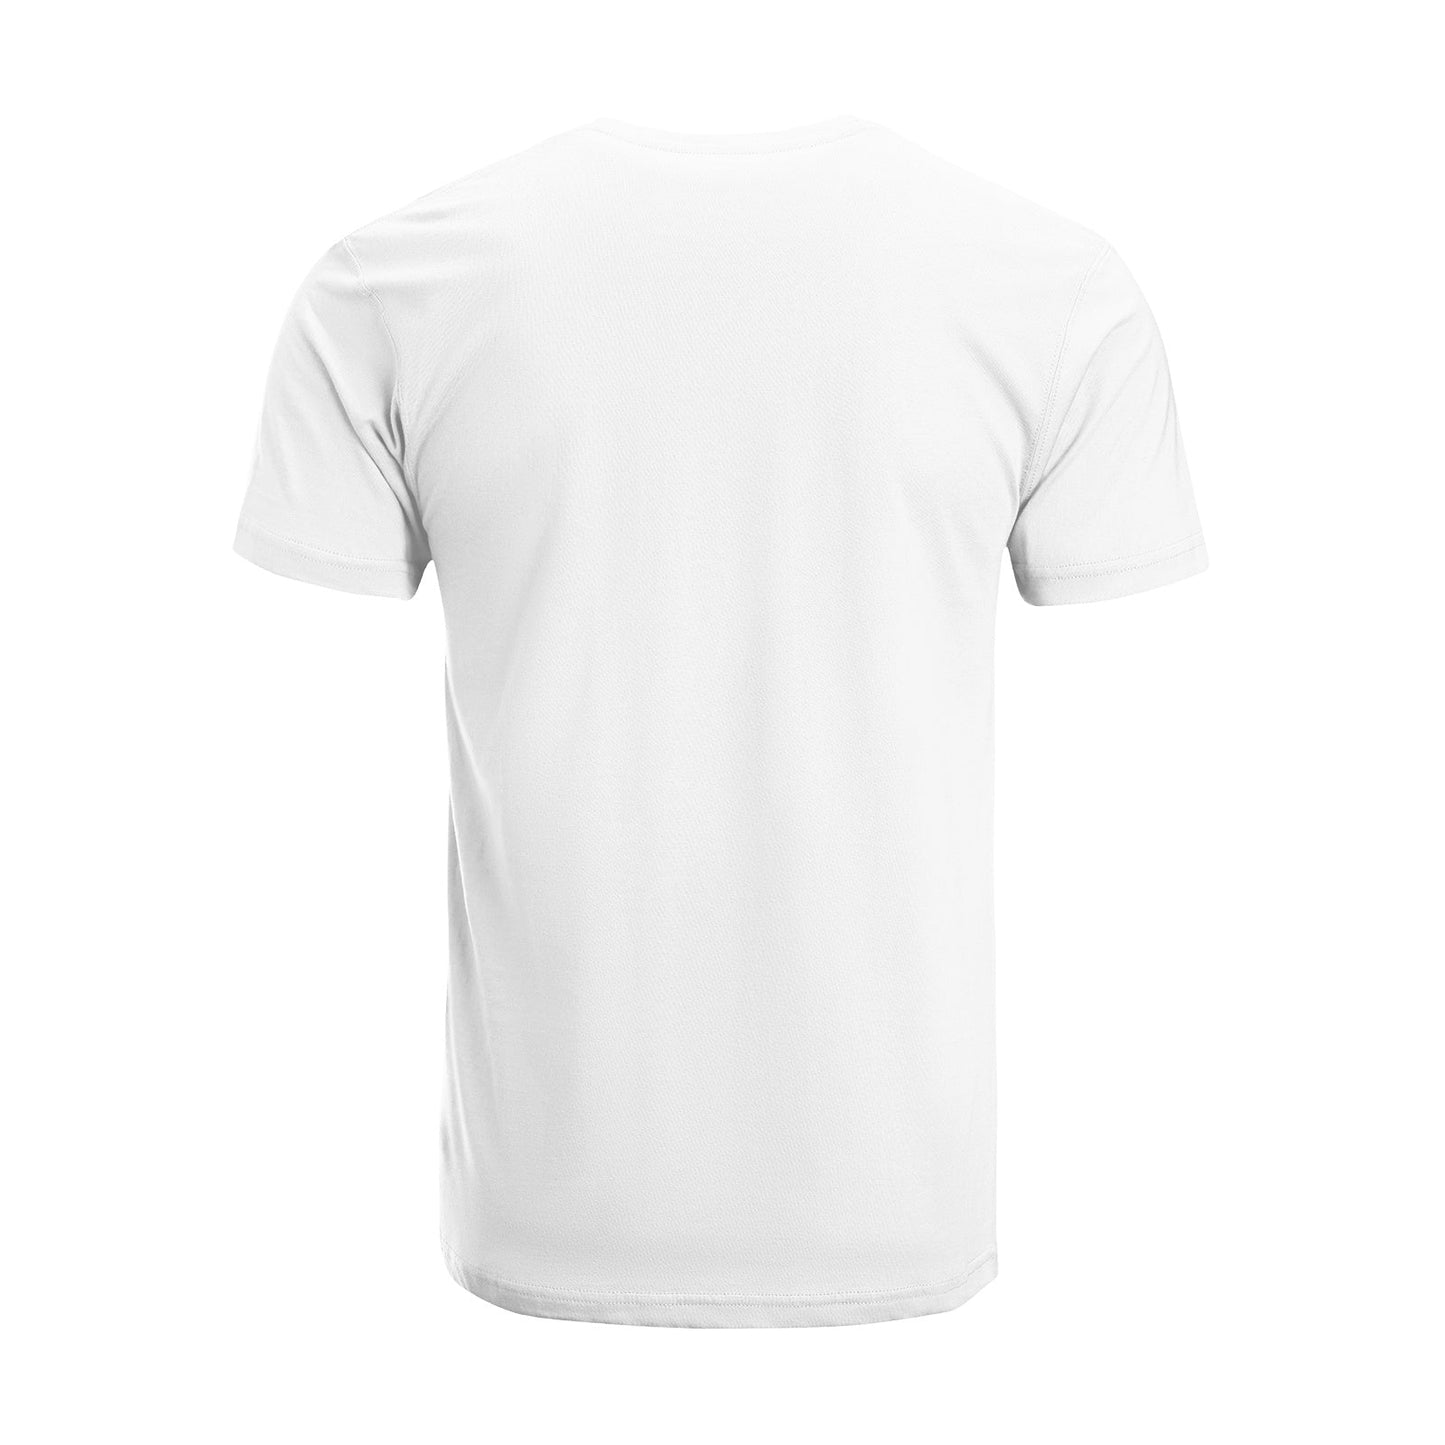 Unisex Short Sleeve Crew Neck Cotton Jersey T-Shirt DOG 09 - Tara-Outfits.com